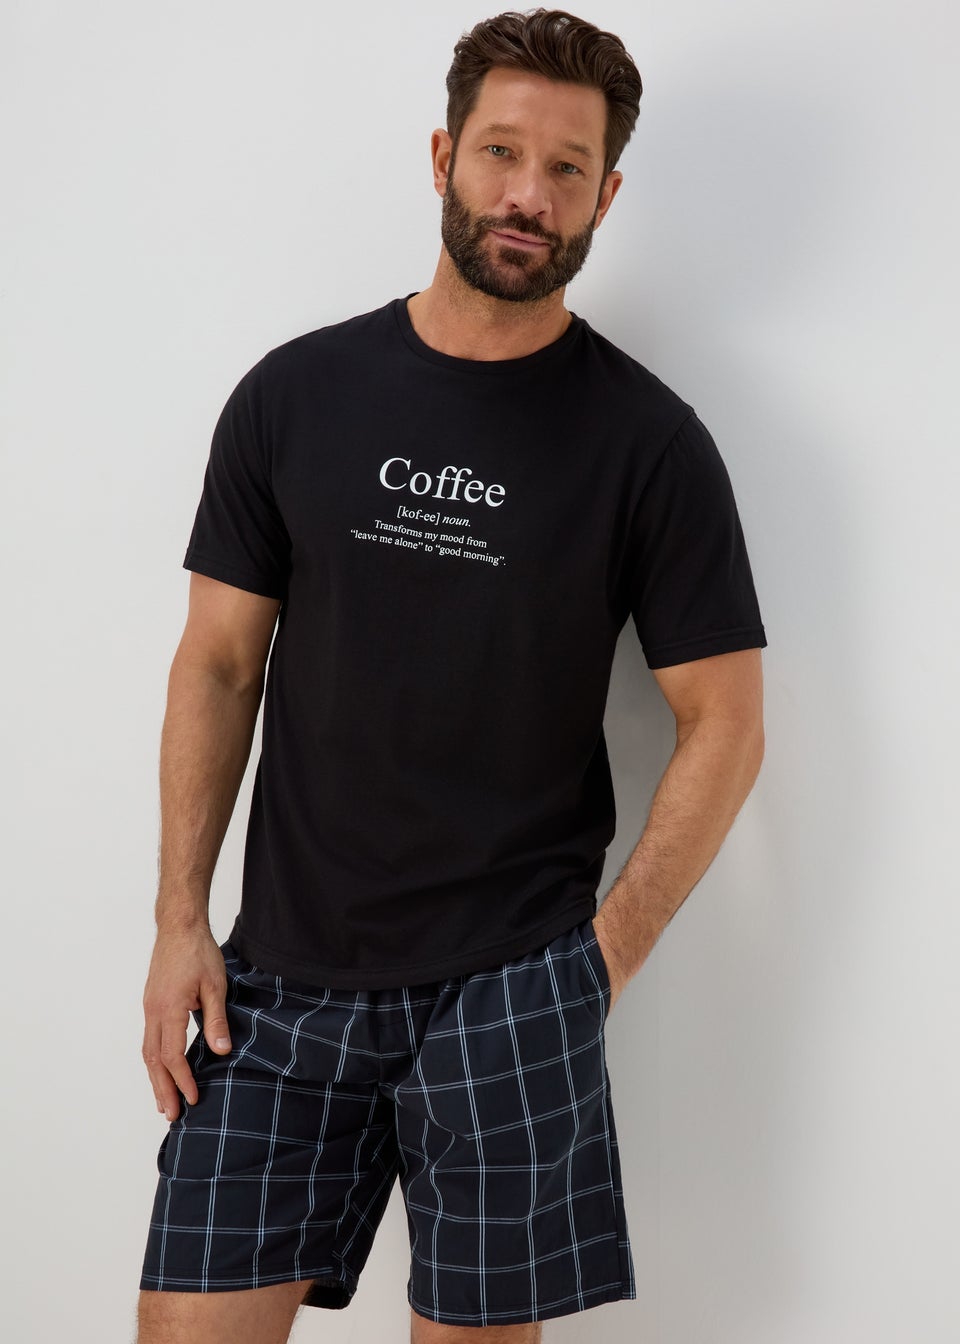 Black Coffee Definition Pyjama Set